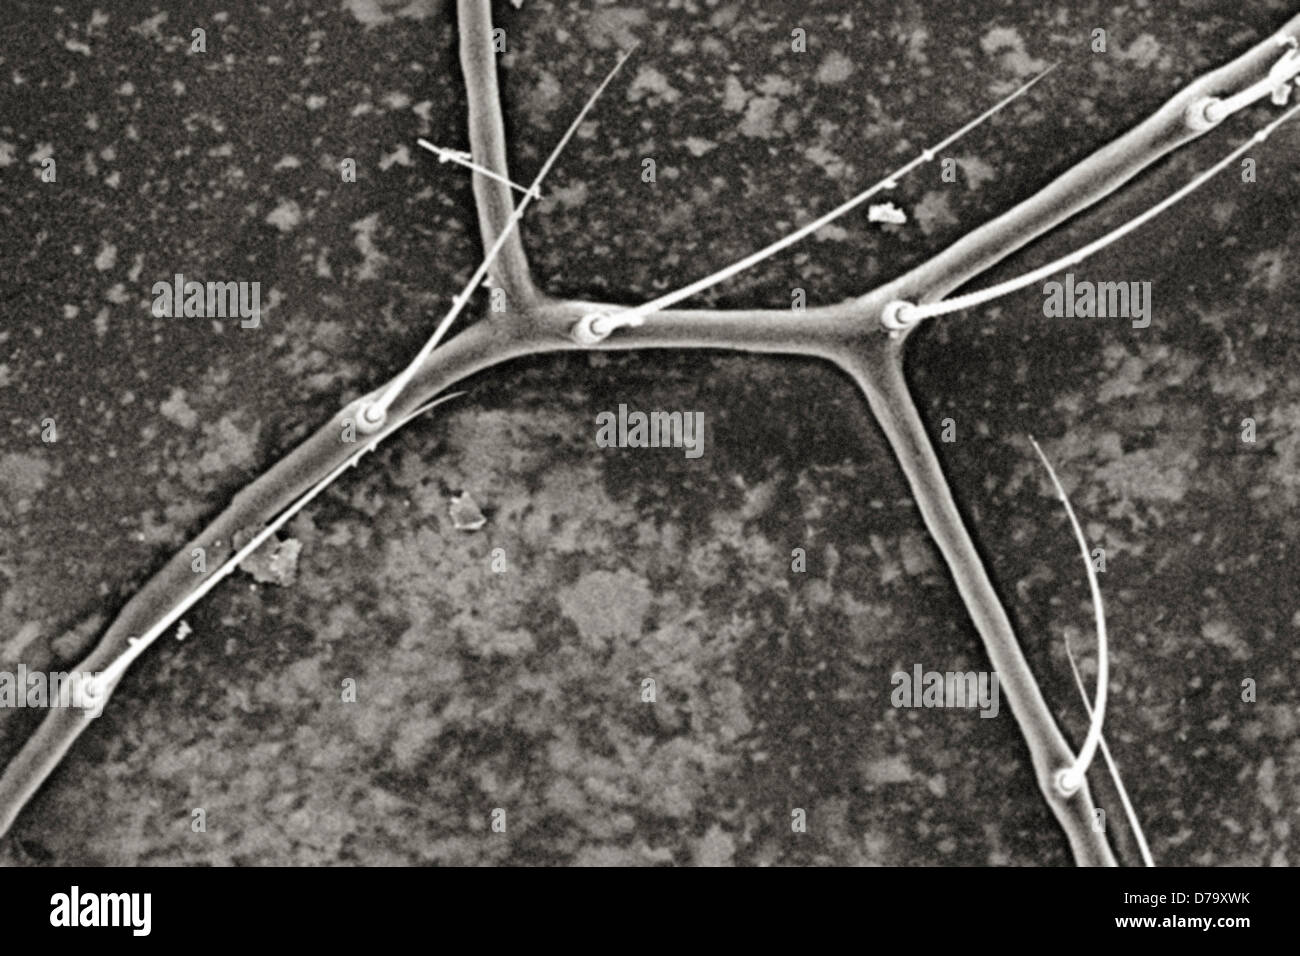 Detalle microscópico de ala de Libélula Foto de stock